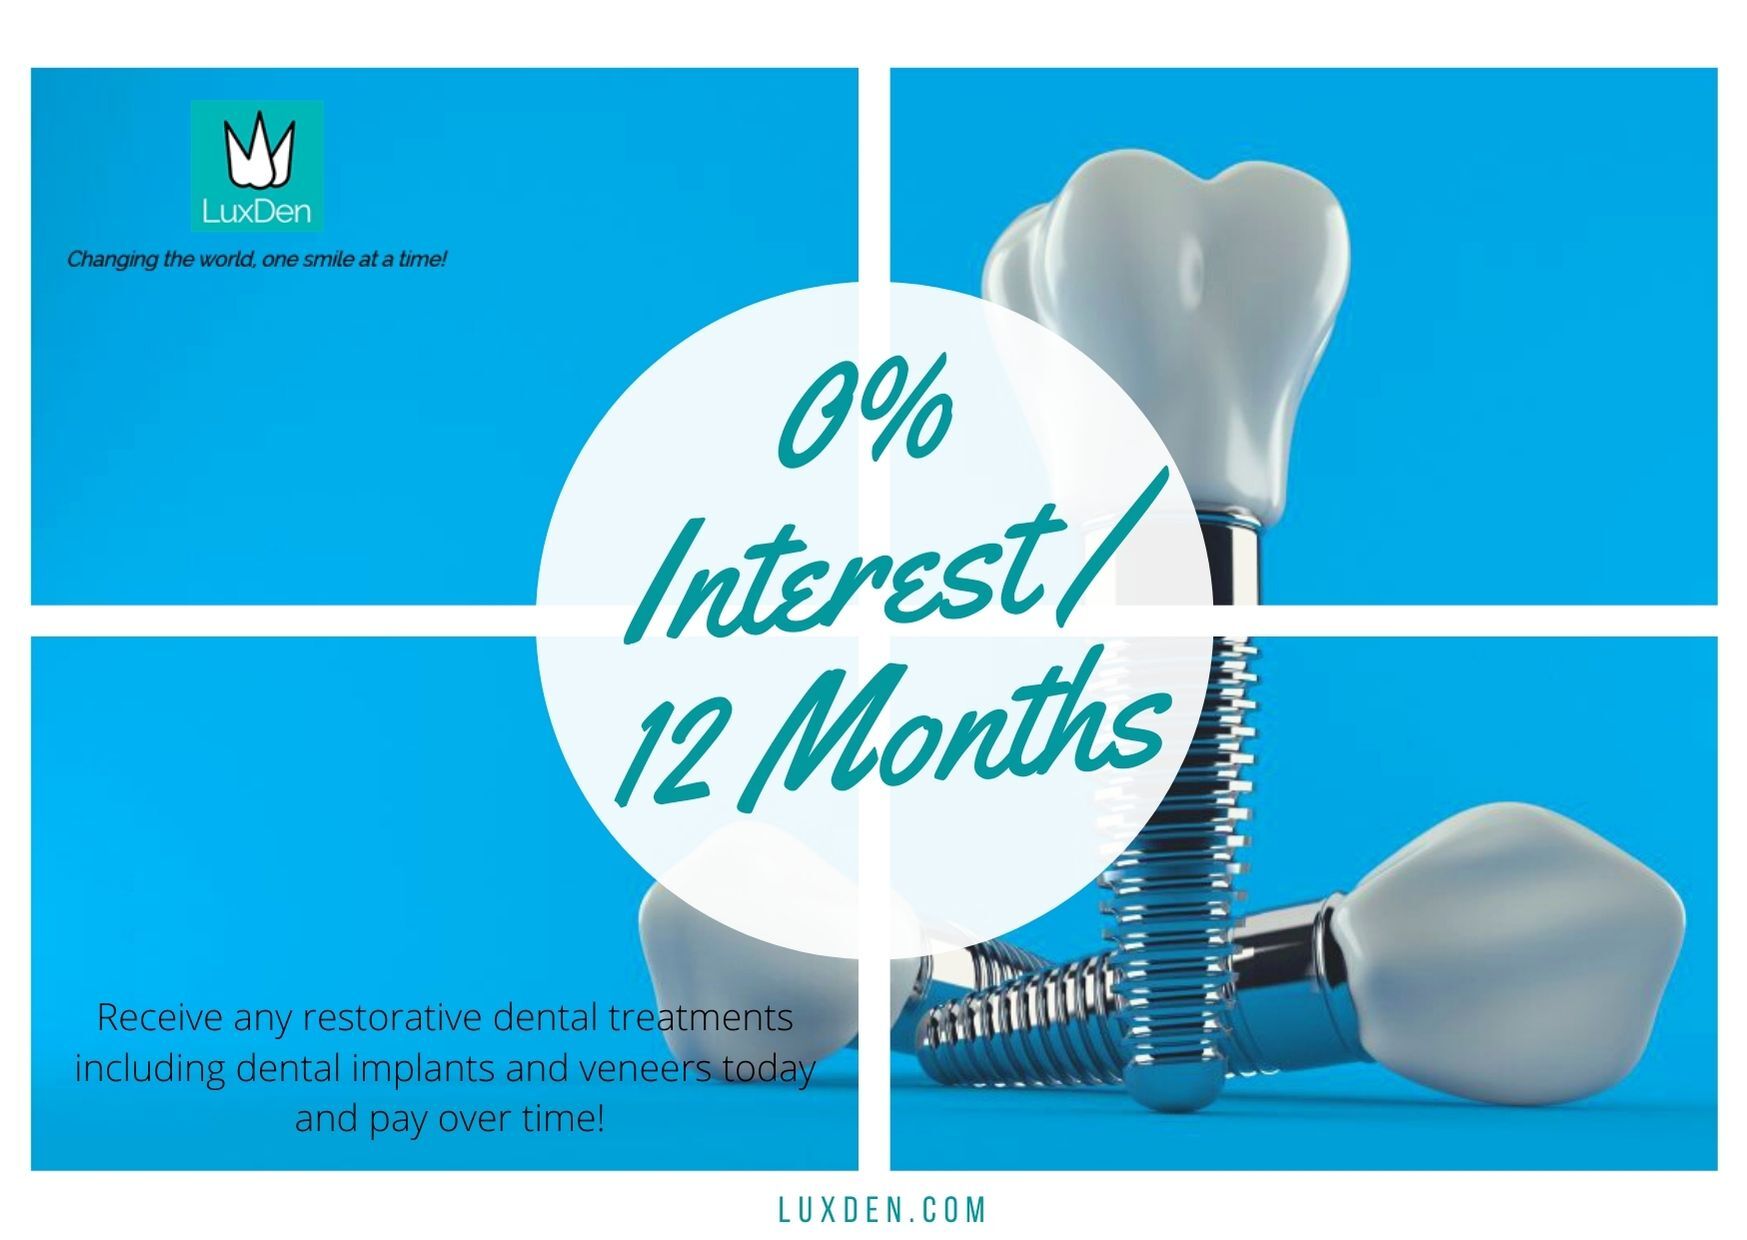 LuxDen Dental Center offers interest-free financing.